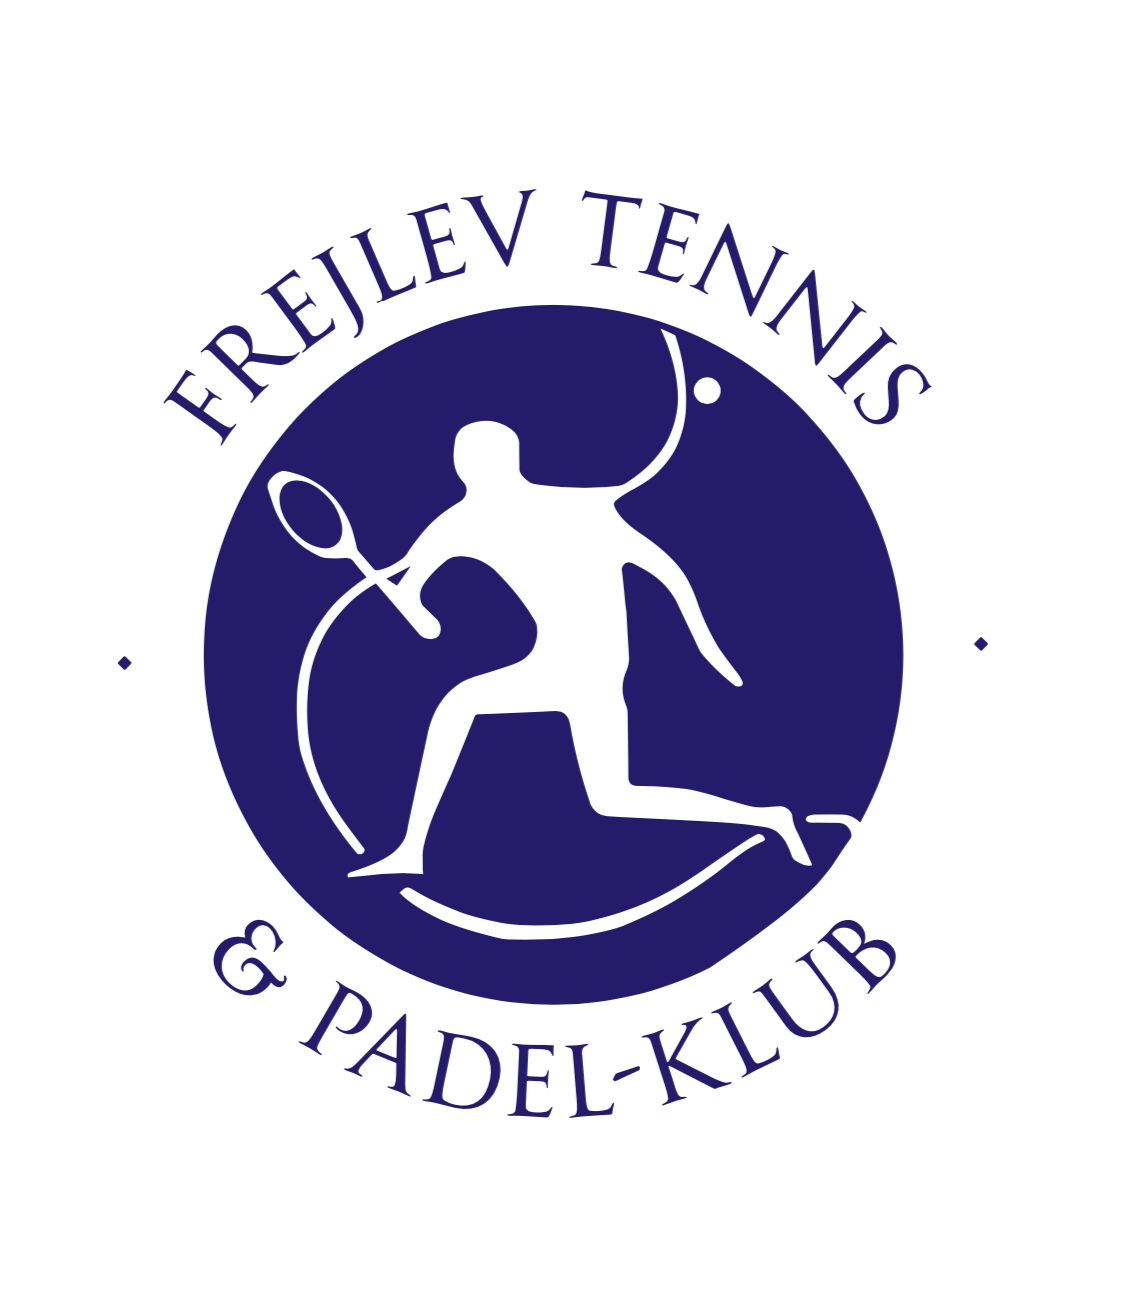 Frejlev Tennis & Padelklub